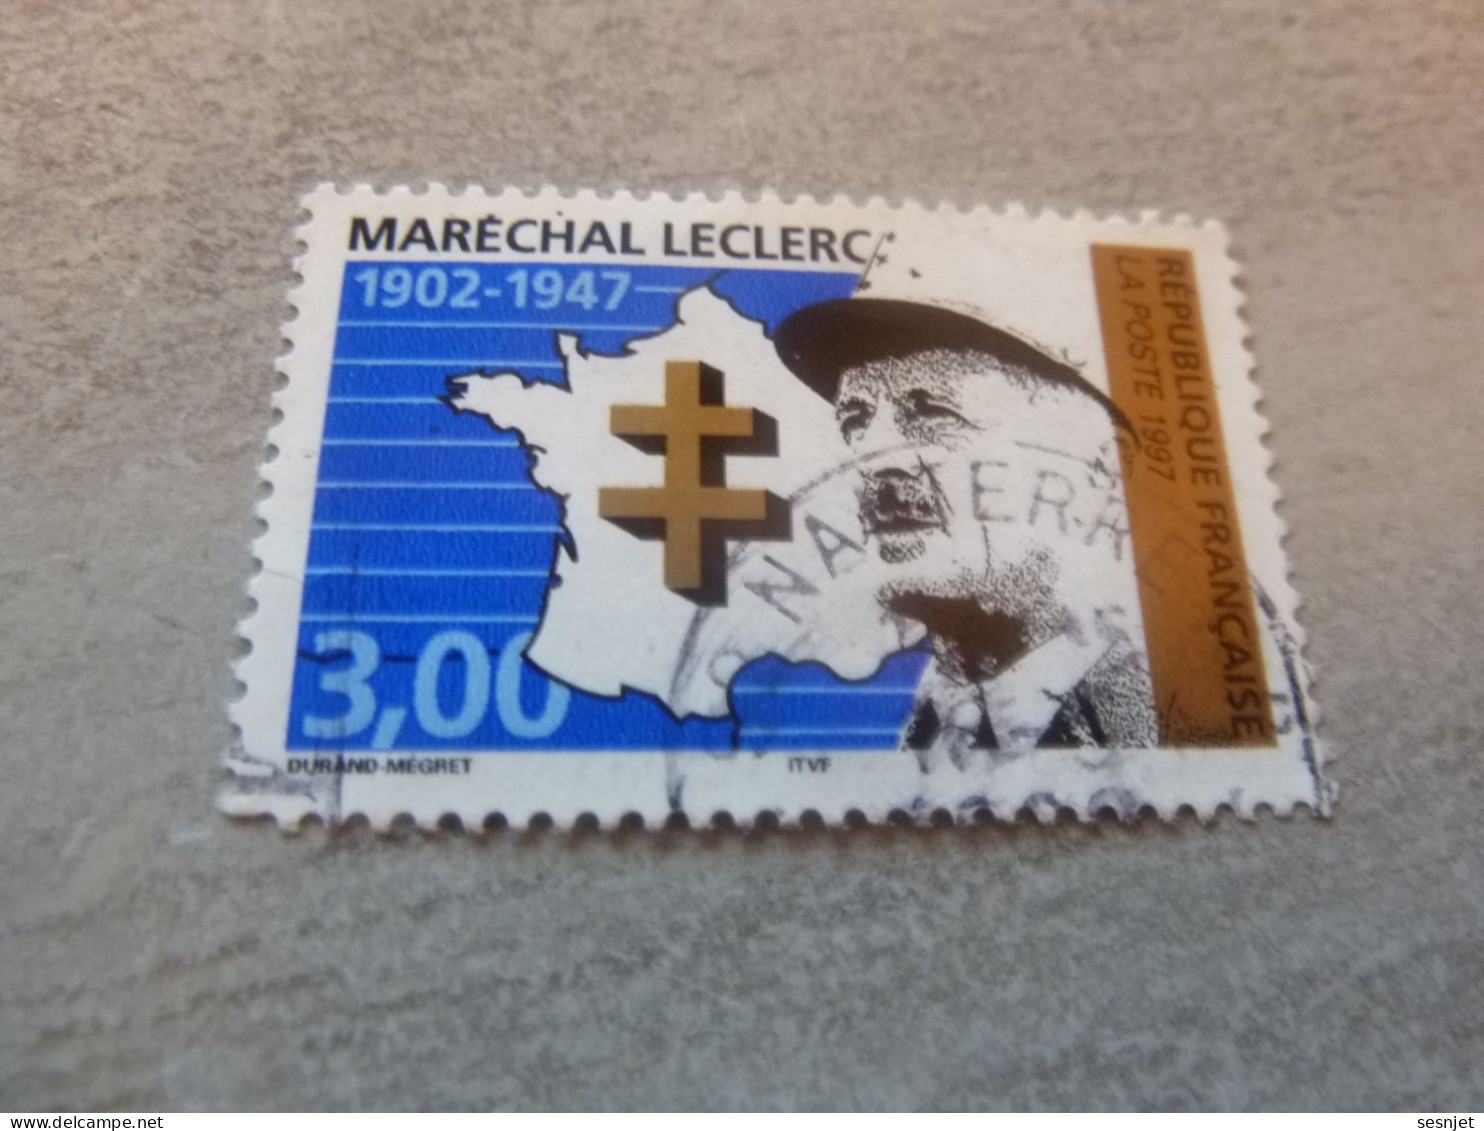 Général Leclerc (1902-1947) Maréchal - 3f. - Yt 3126 - Vert, Noir Et Bleu - Oblitéré - Année 1997 - - Gebruikt